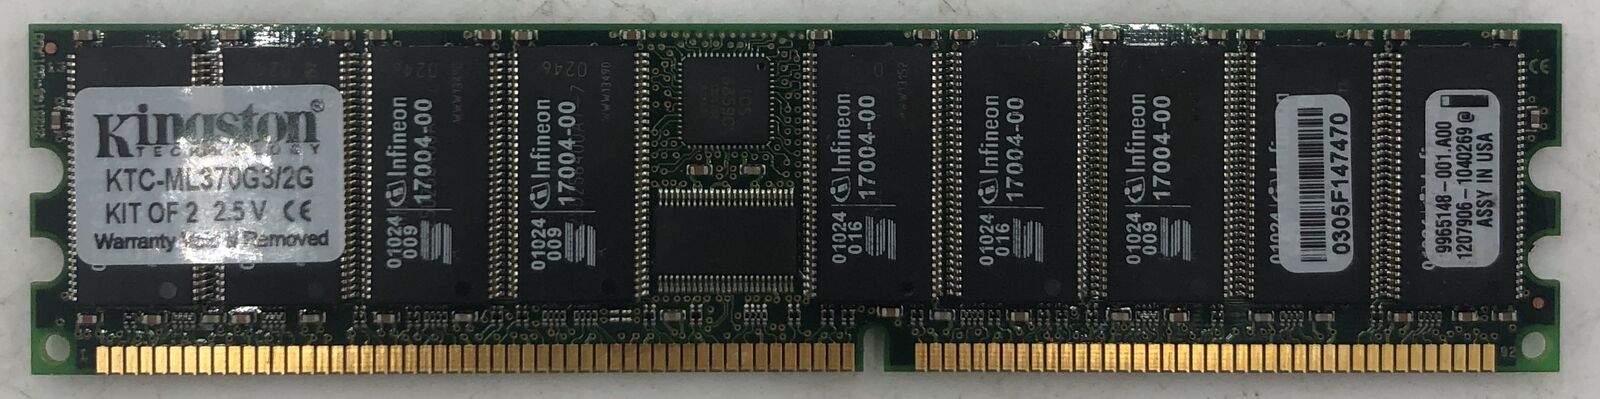 Kingston KTC-ML370G3/2G 1GB DDR Server RAM Memory